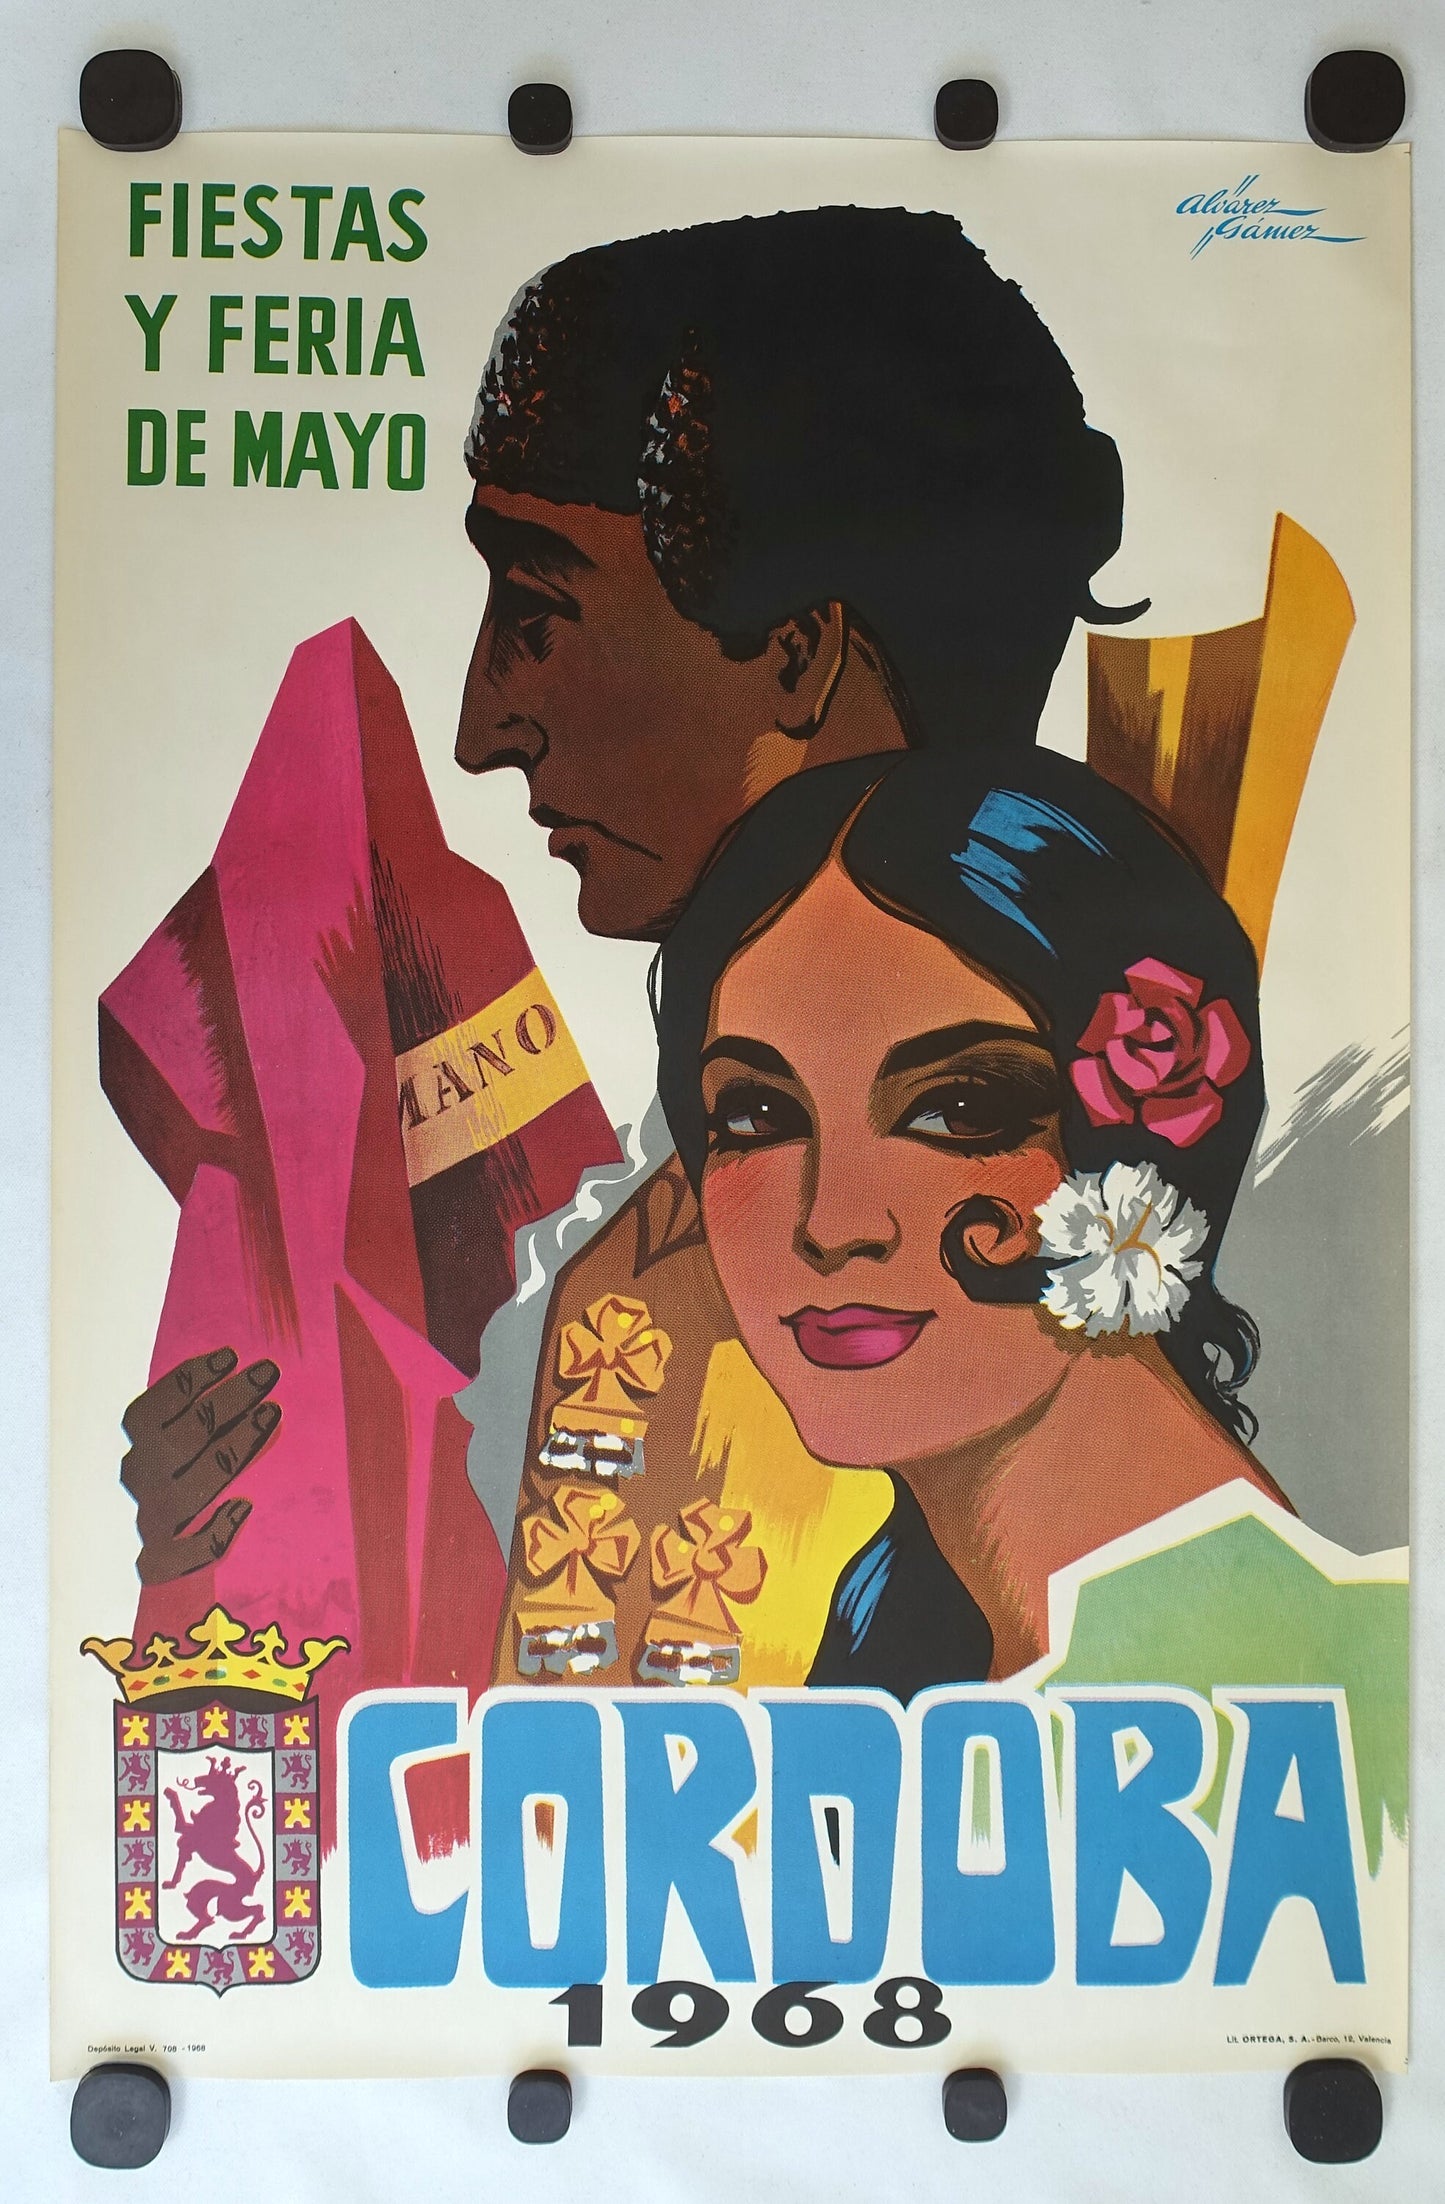 1968 Festival of Cordoba (Spanish poster) - Original Vintage Poster